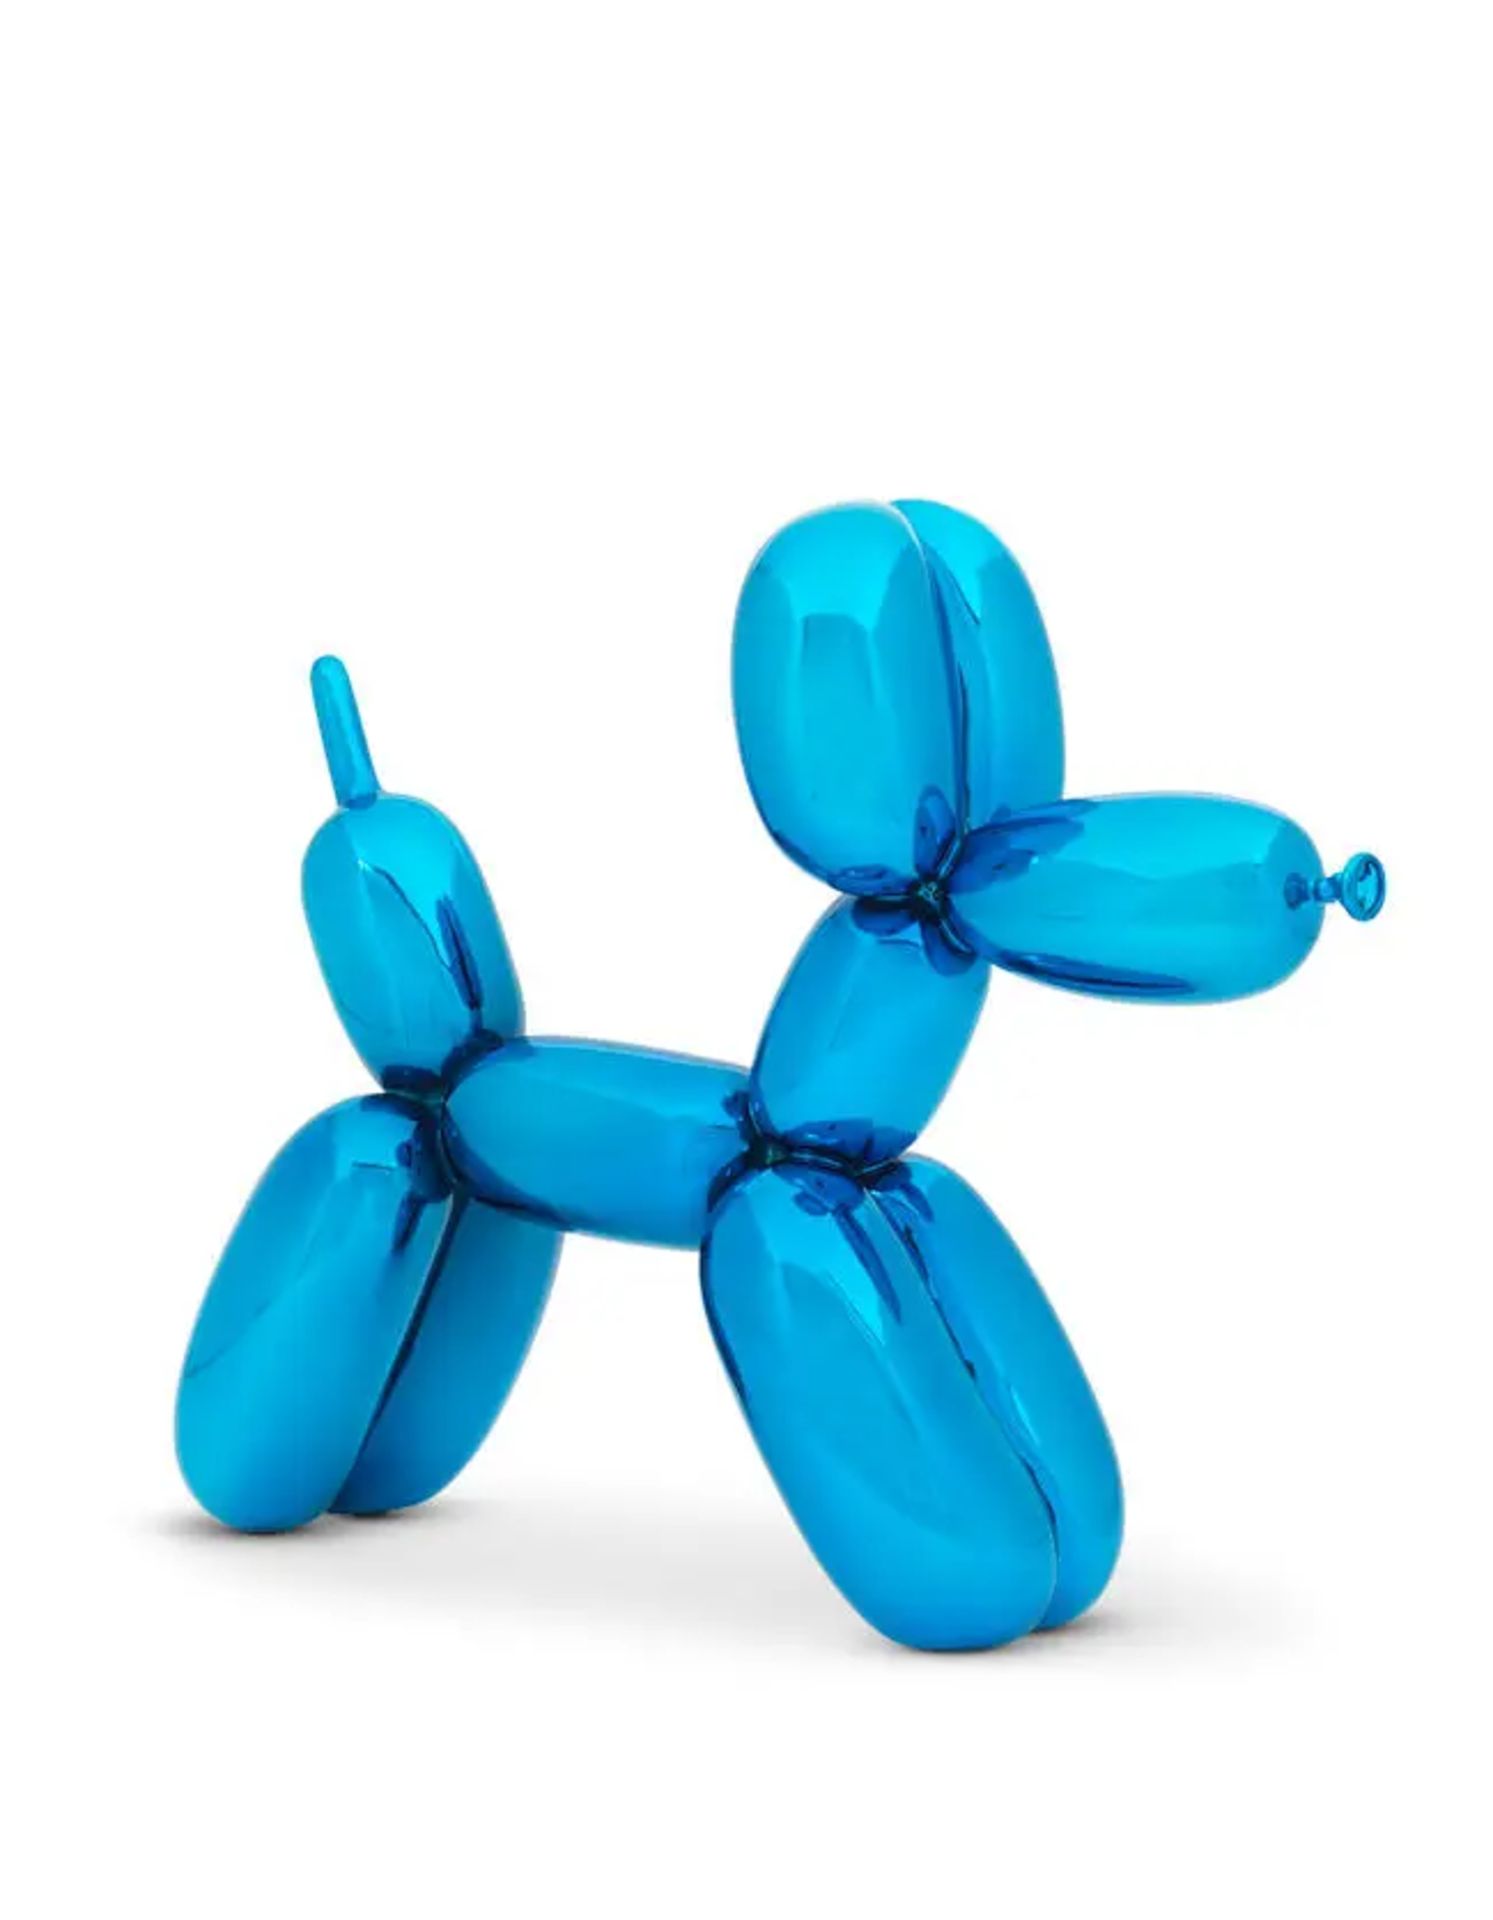 Jeff Koons (American, born 1955) Balloon Dog (Blue) Porcelain multiple painted in chrome, 2021, ...